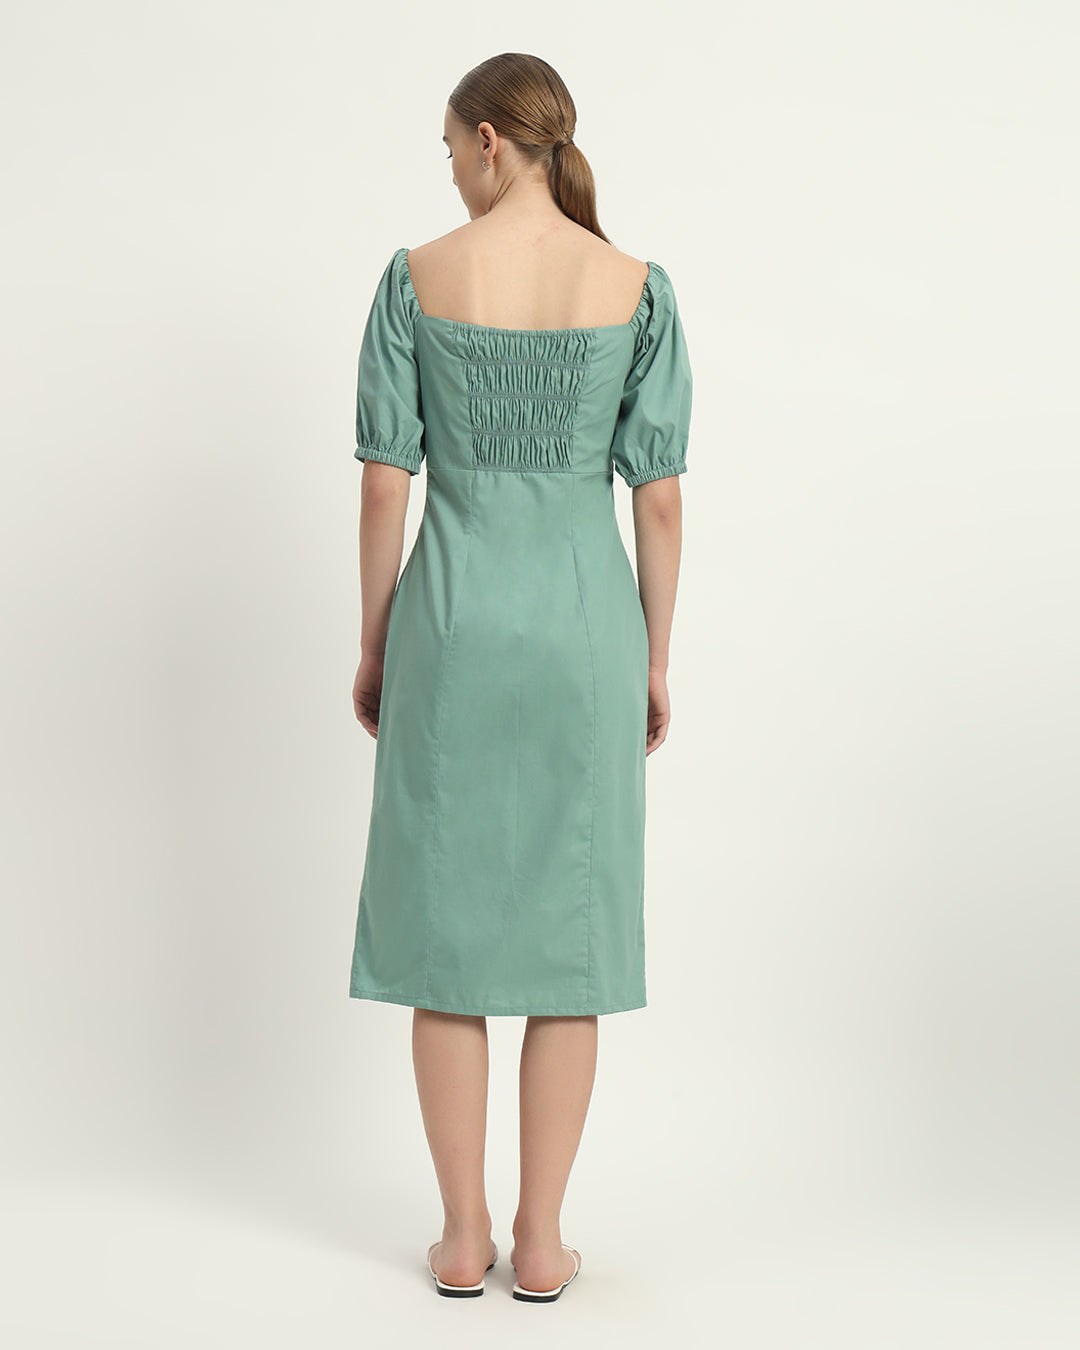 The Mint Erwin Cotton Dress